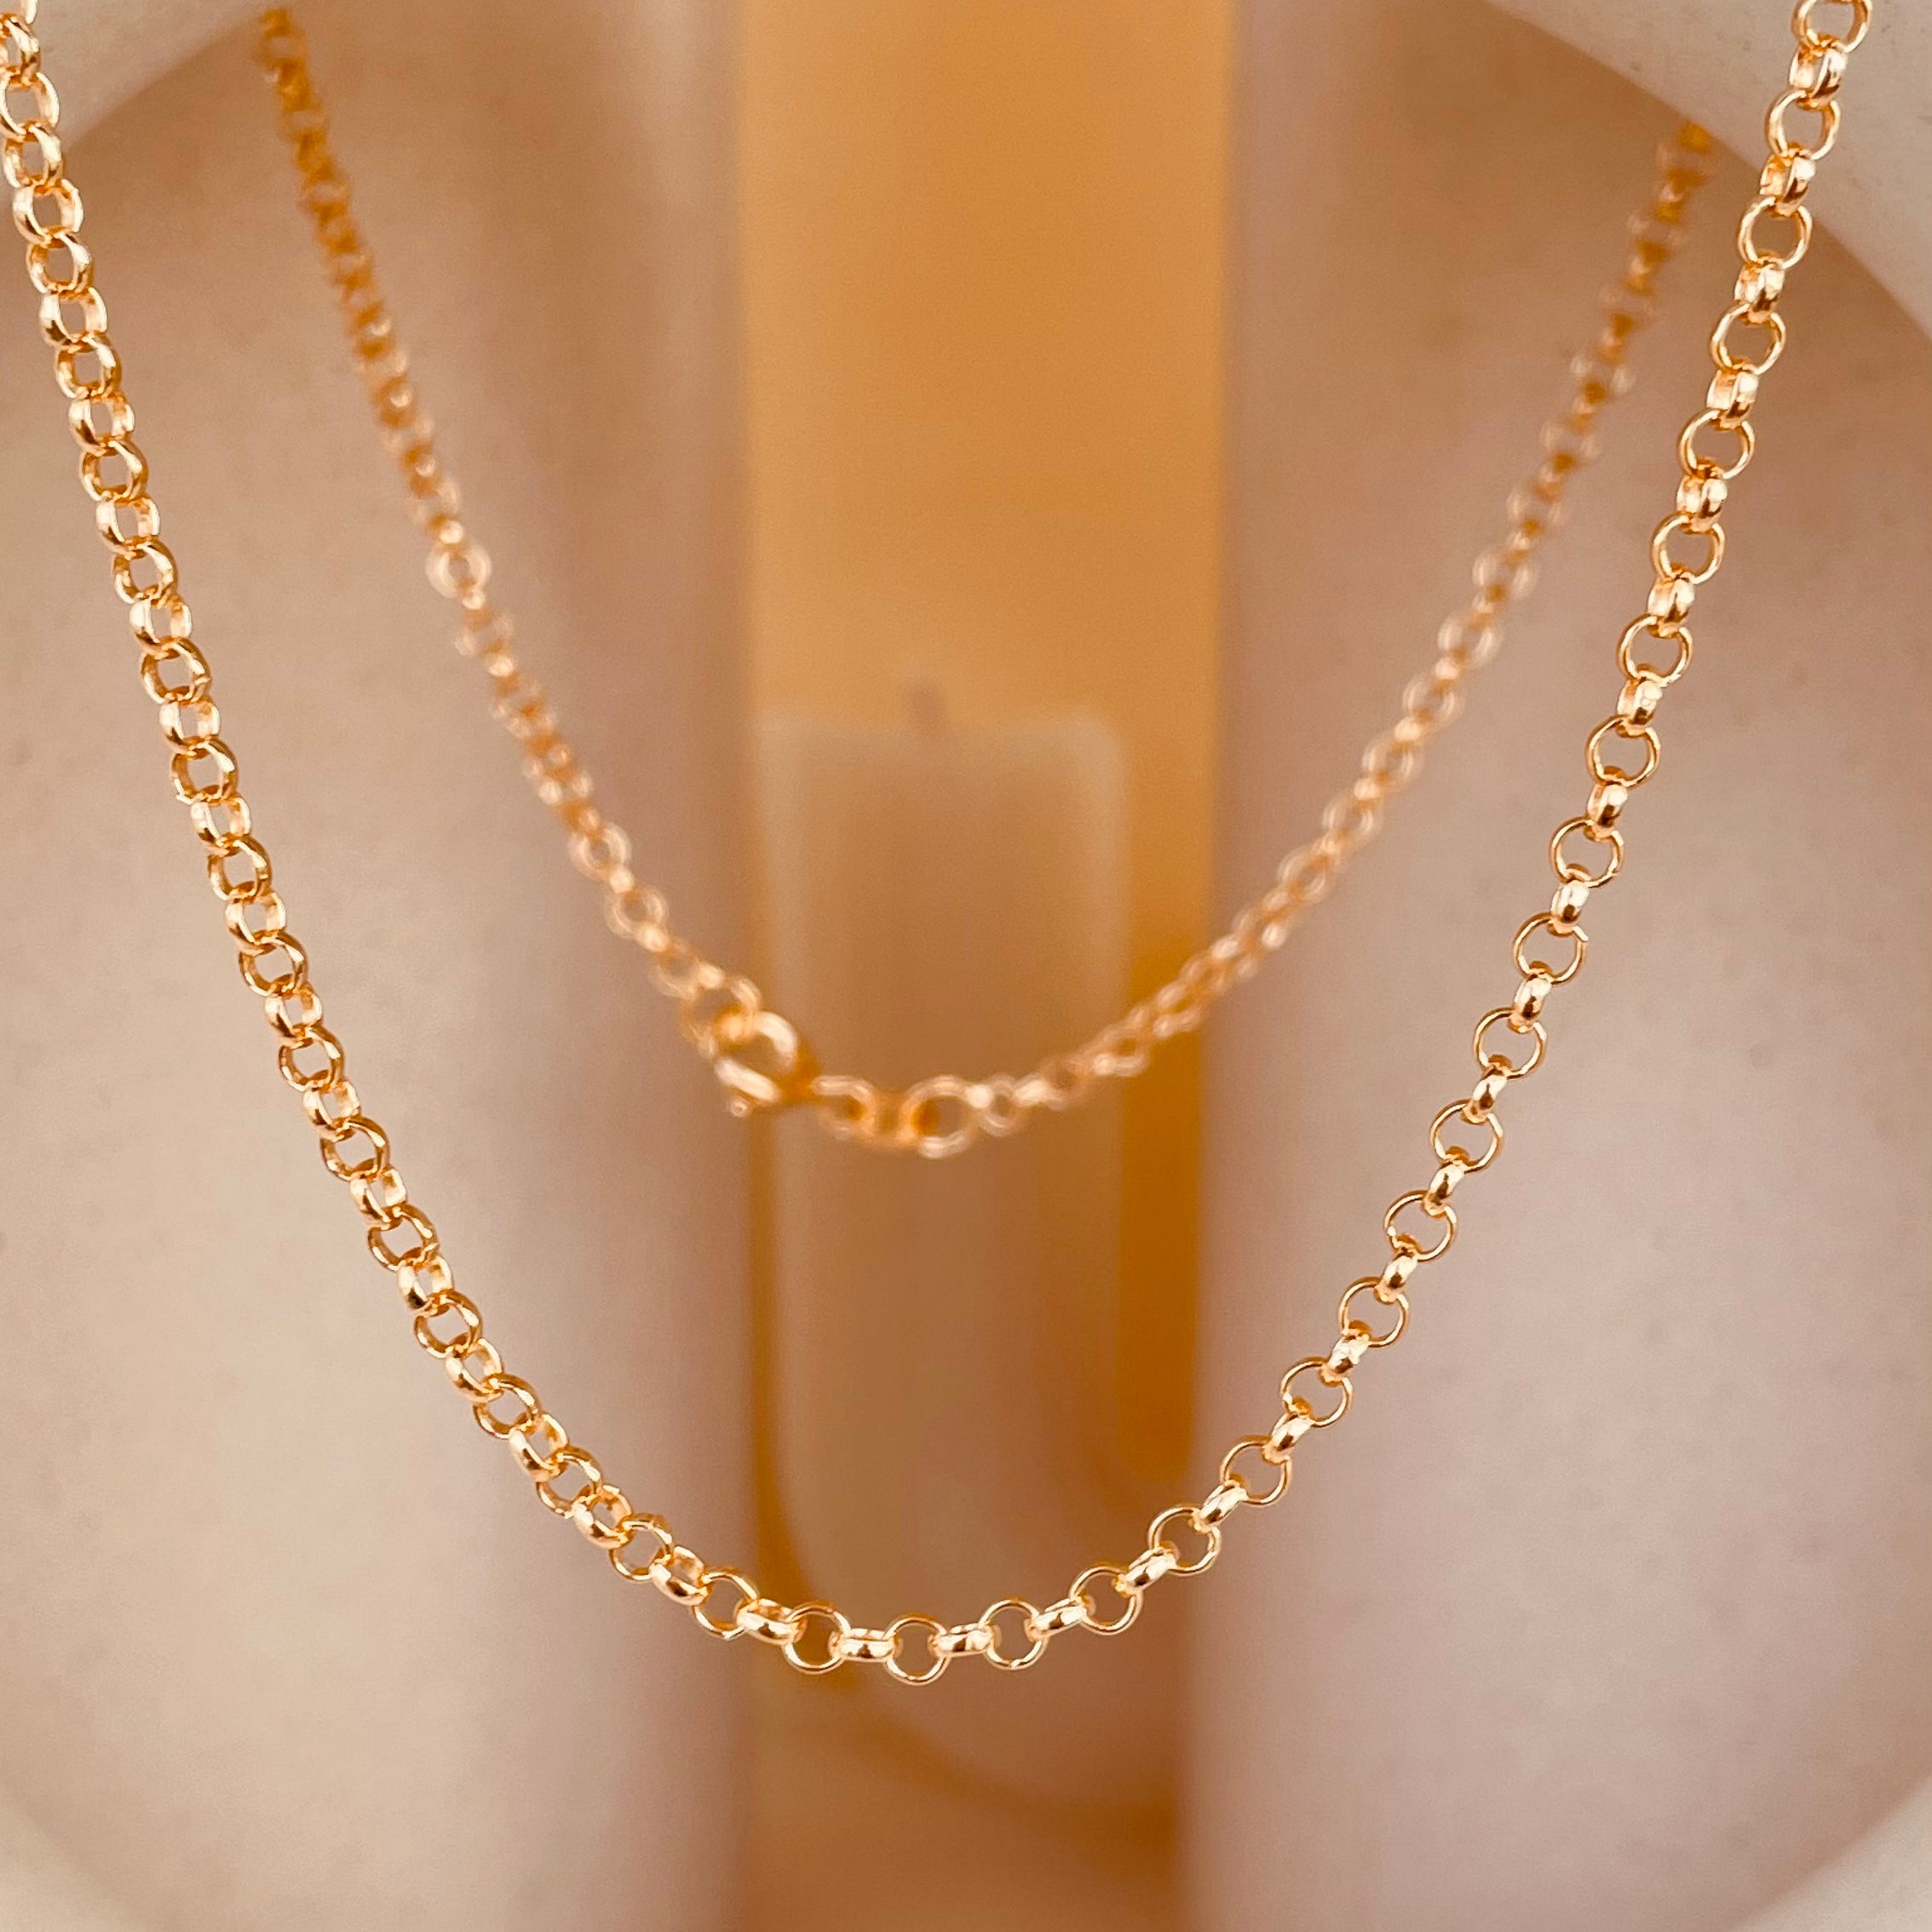 Silver Rolo Chain Necklace - Octonov 